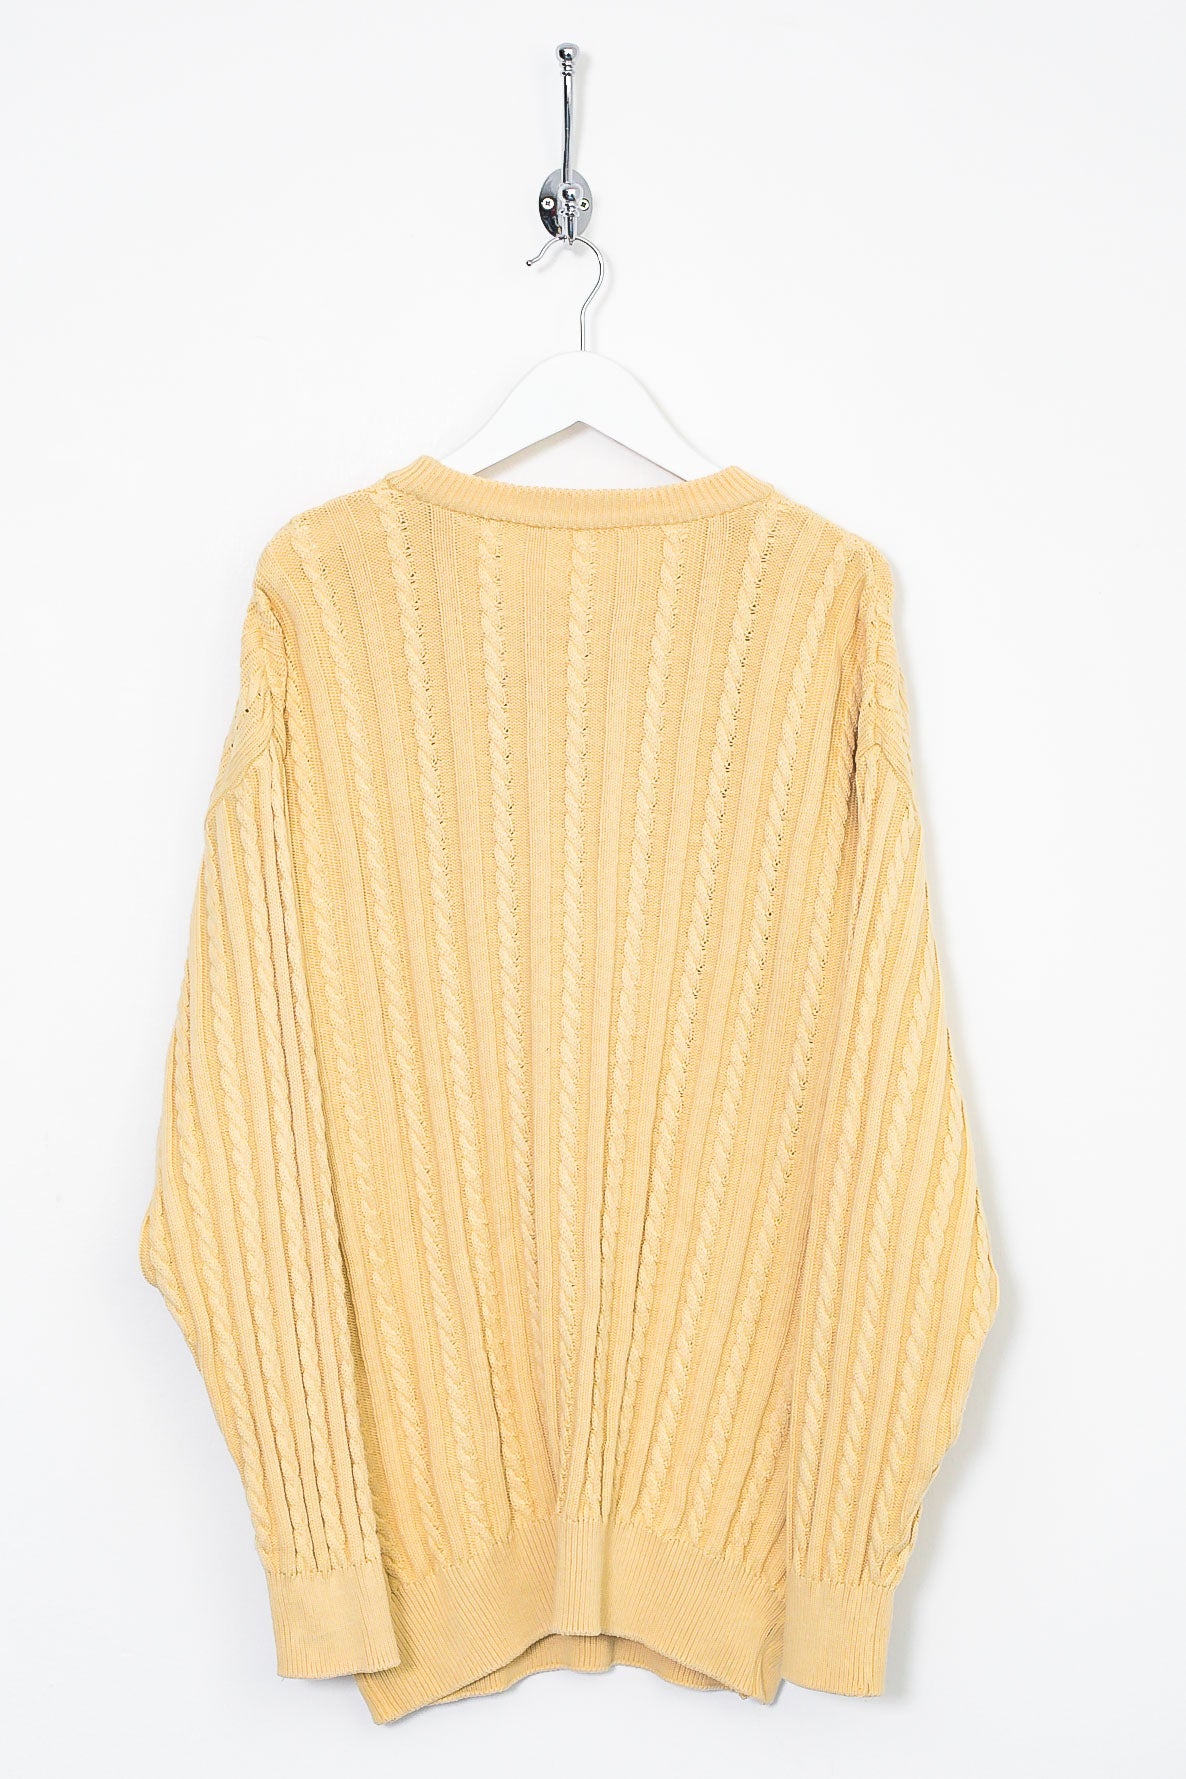 90s Burberry Knit Sweatshirt (XL)